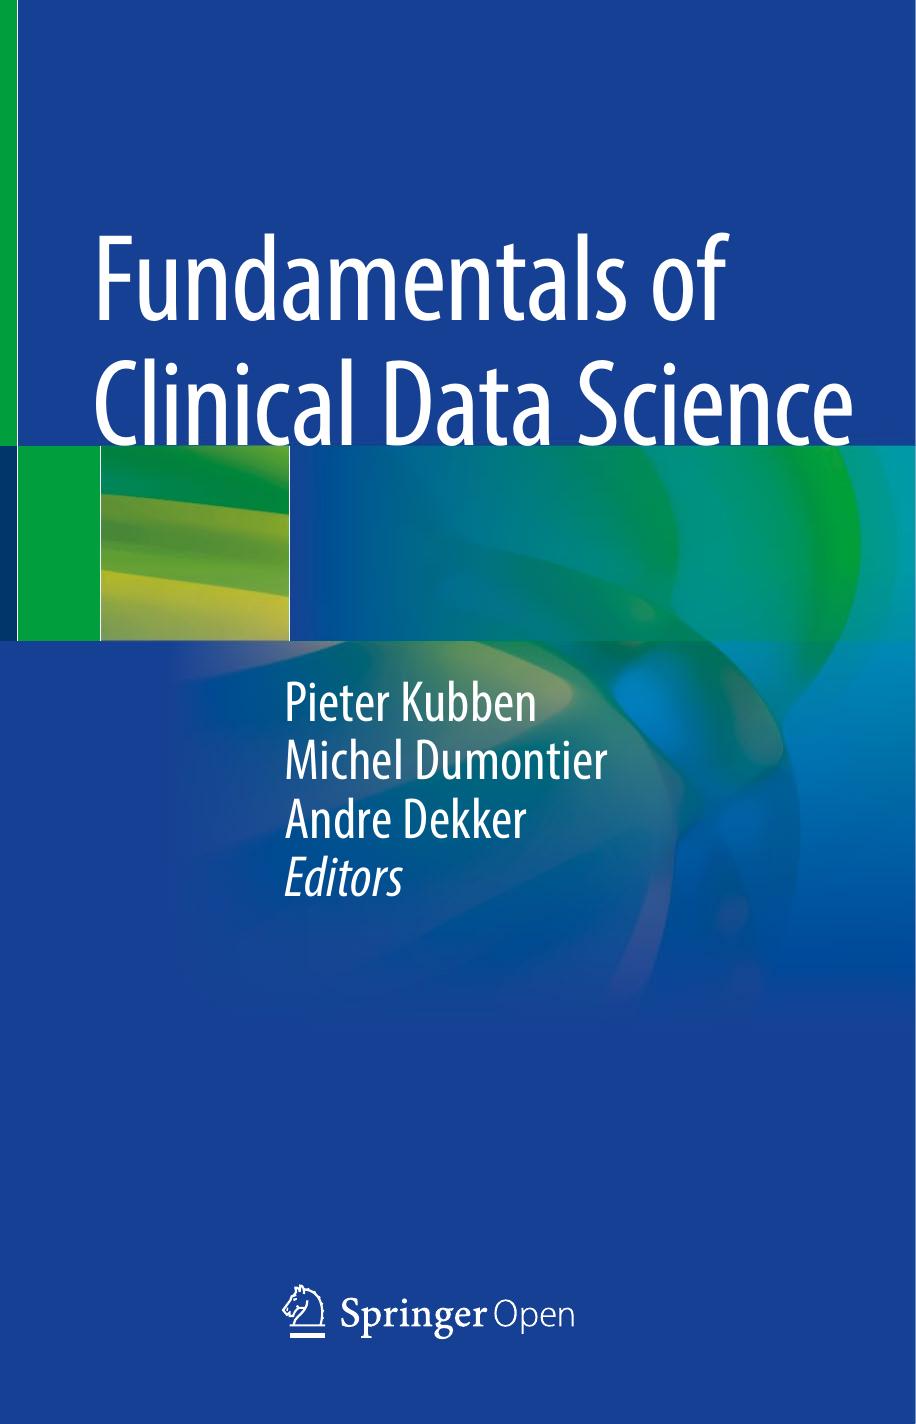 Fundamentals of Clinical Data Science by Pieter Kubben & Michel Dumontier & Andre Dekker